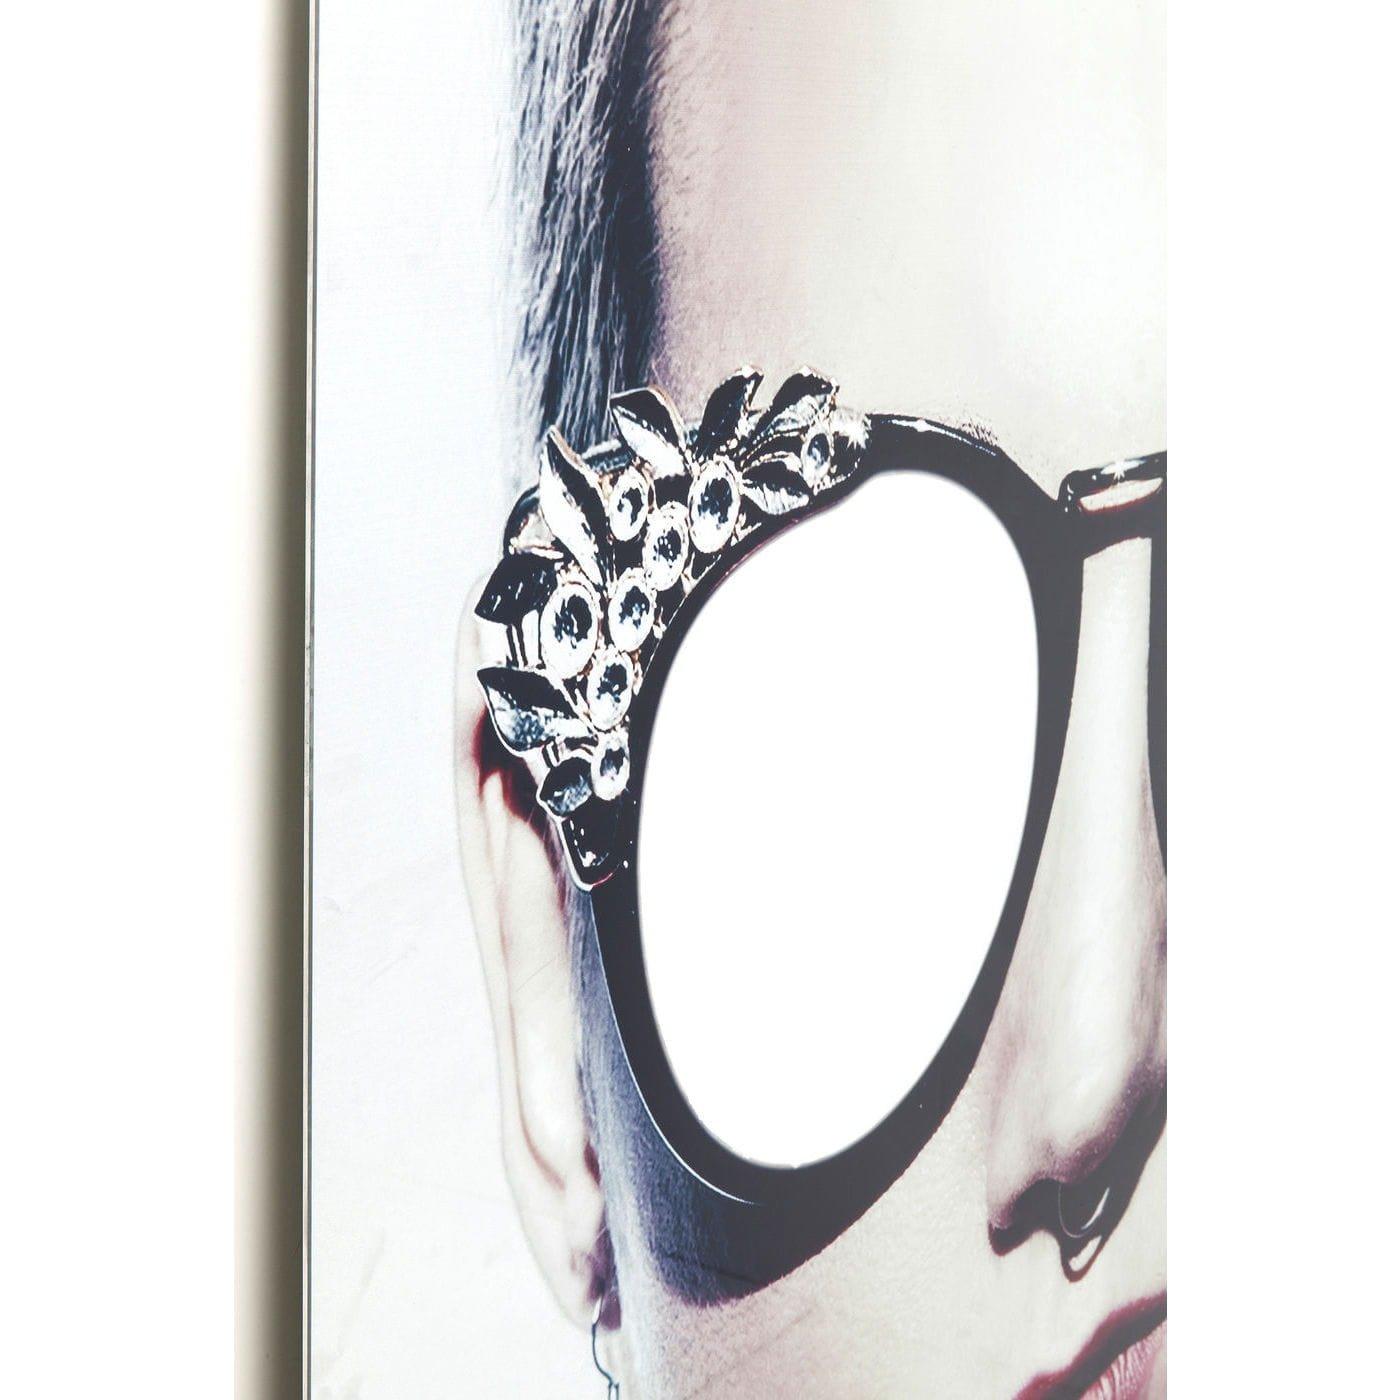 KARE Design Bild Glas Metallic Girlie 120x120cm  